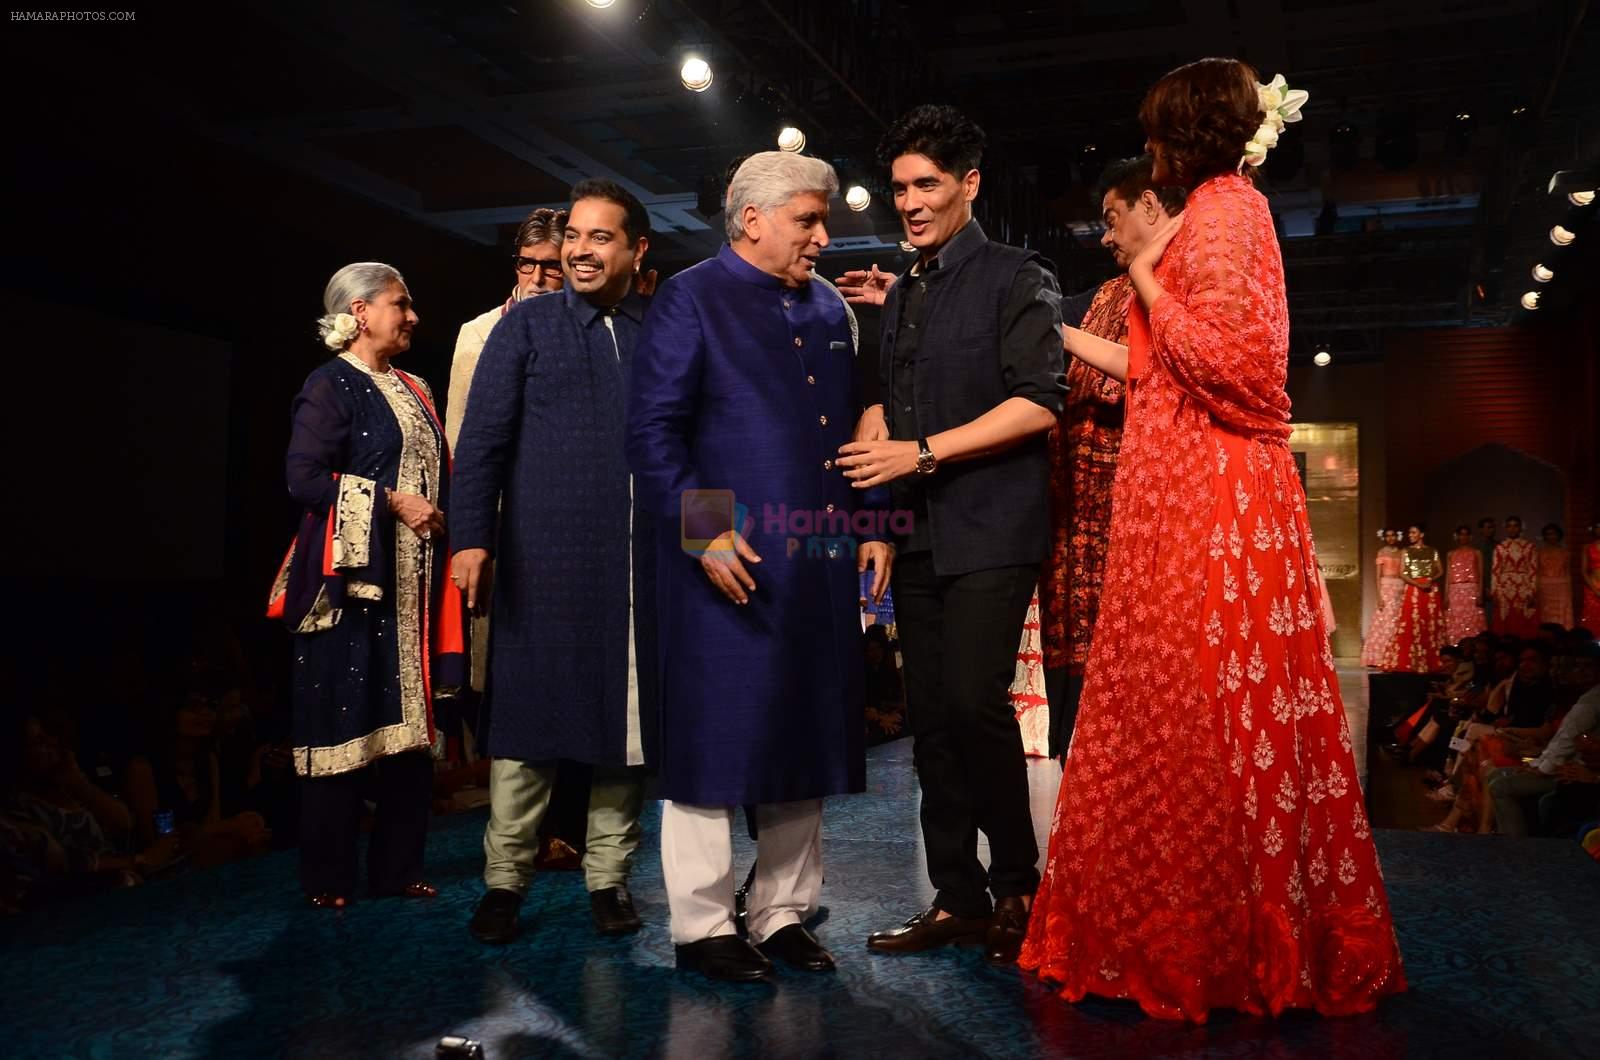 Amitabh Bachchan, Jaya Bachchan, Sonakshi Sinha, Javed Akhtar, Shankar Mahadevan at Manish Malhotra presents Mijwan-The Legacy in Grand Hyatt, Mumbai on 4th April 2015